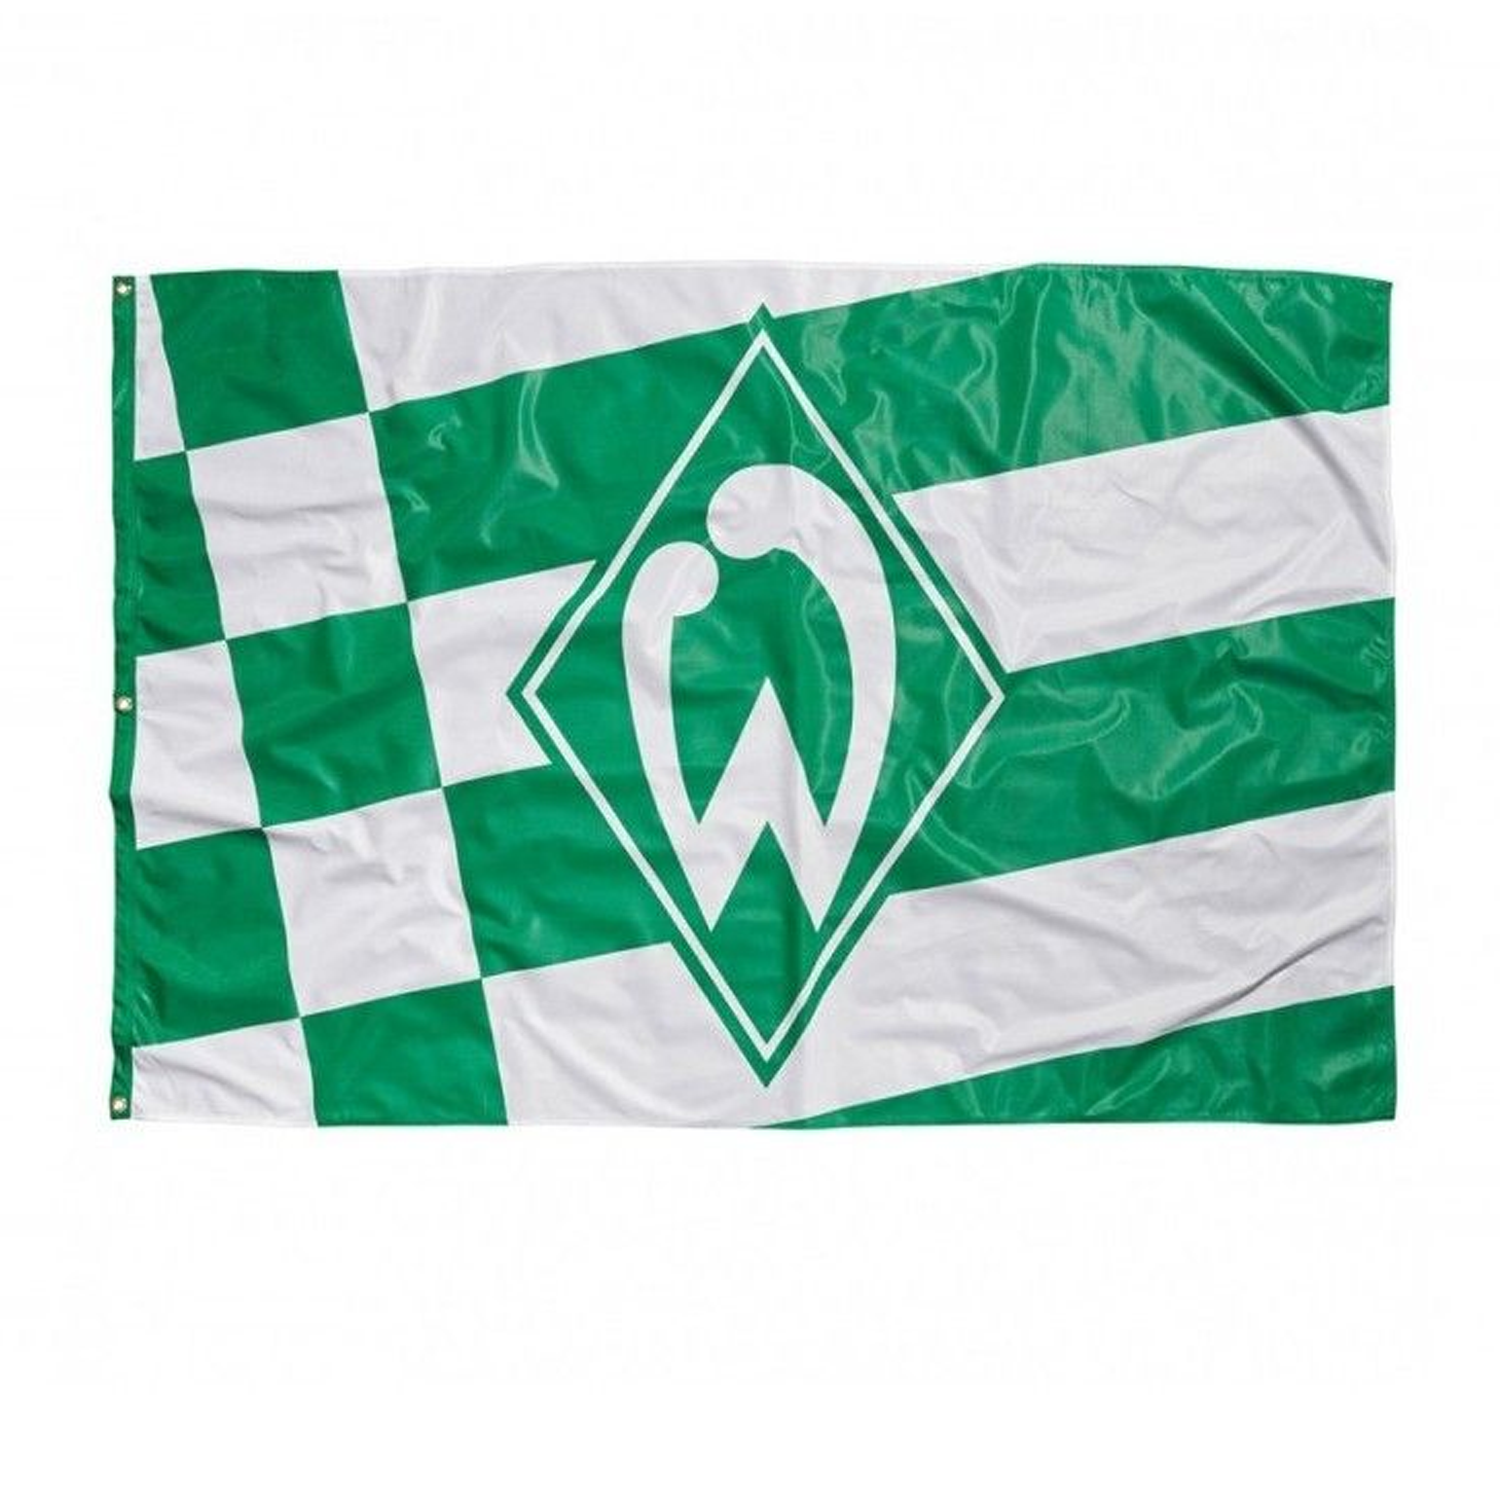 SV Werder Bremen - Hissfahne Raute 180x120cm - multicolor